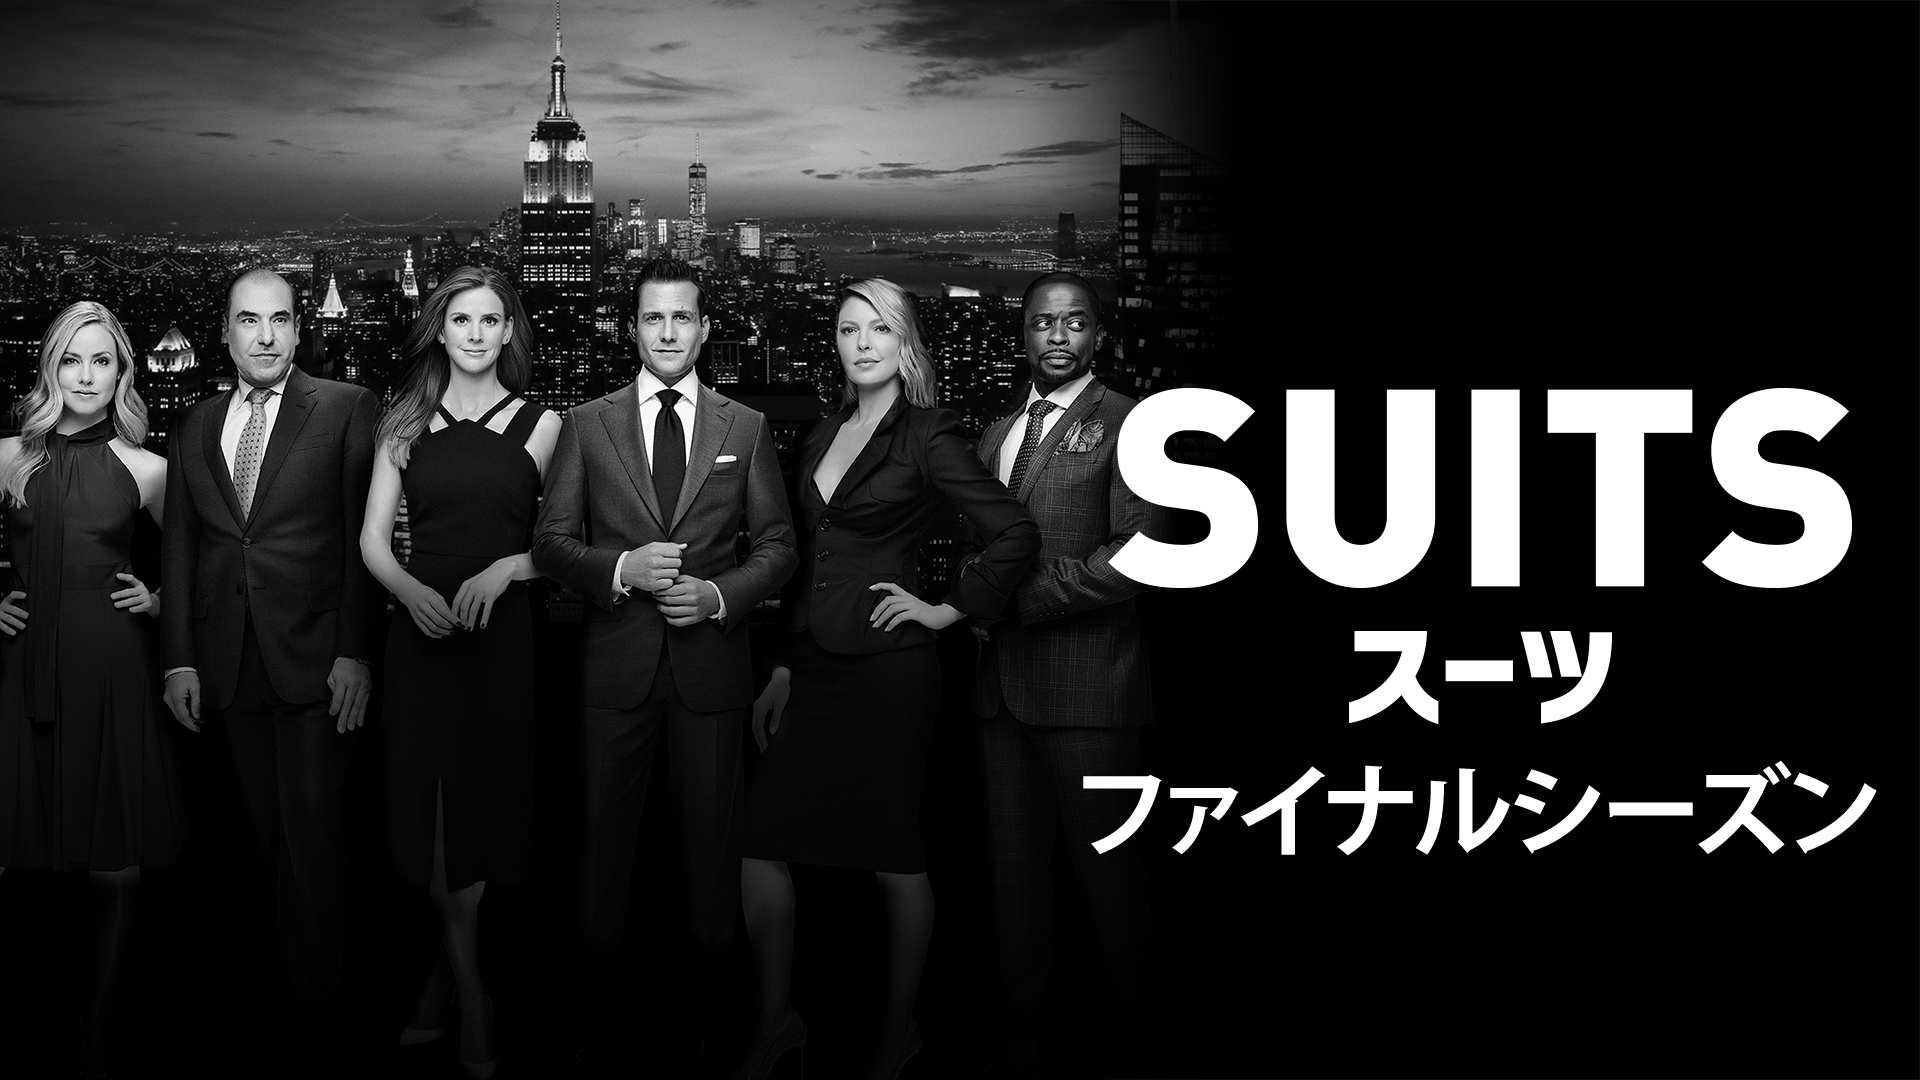 Suits スーツ ファイナル シーズンがu Nextで本日配信開始 2分で分かる Suits スーツ 動画も公開 株式会社 U Nextのプレスリリース